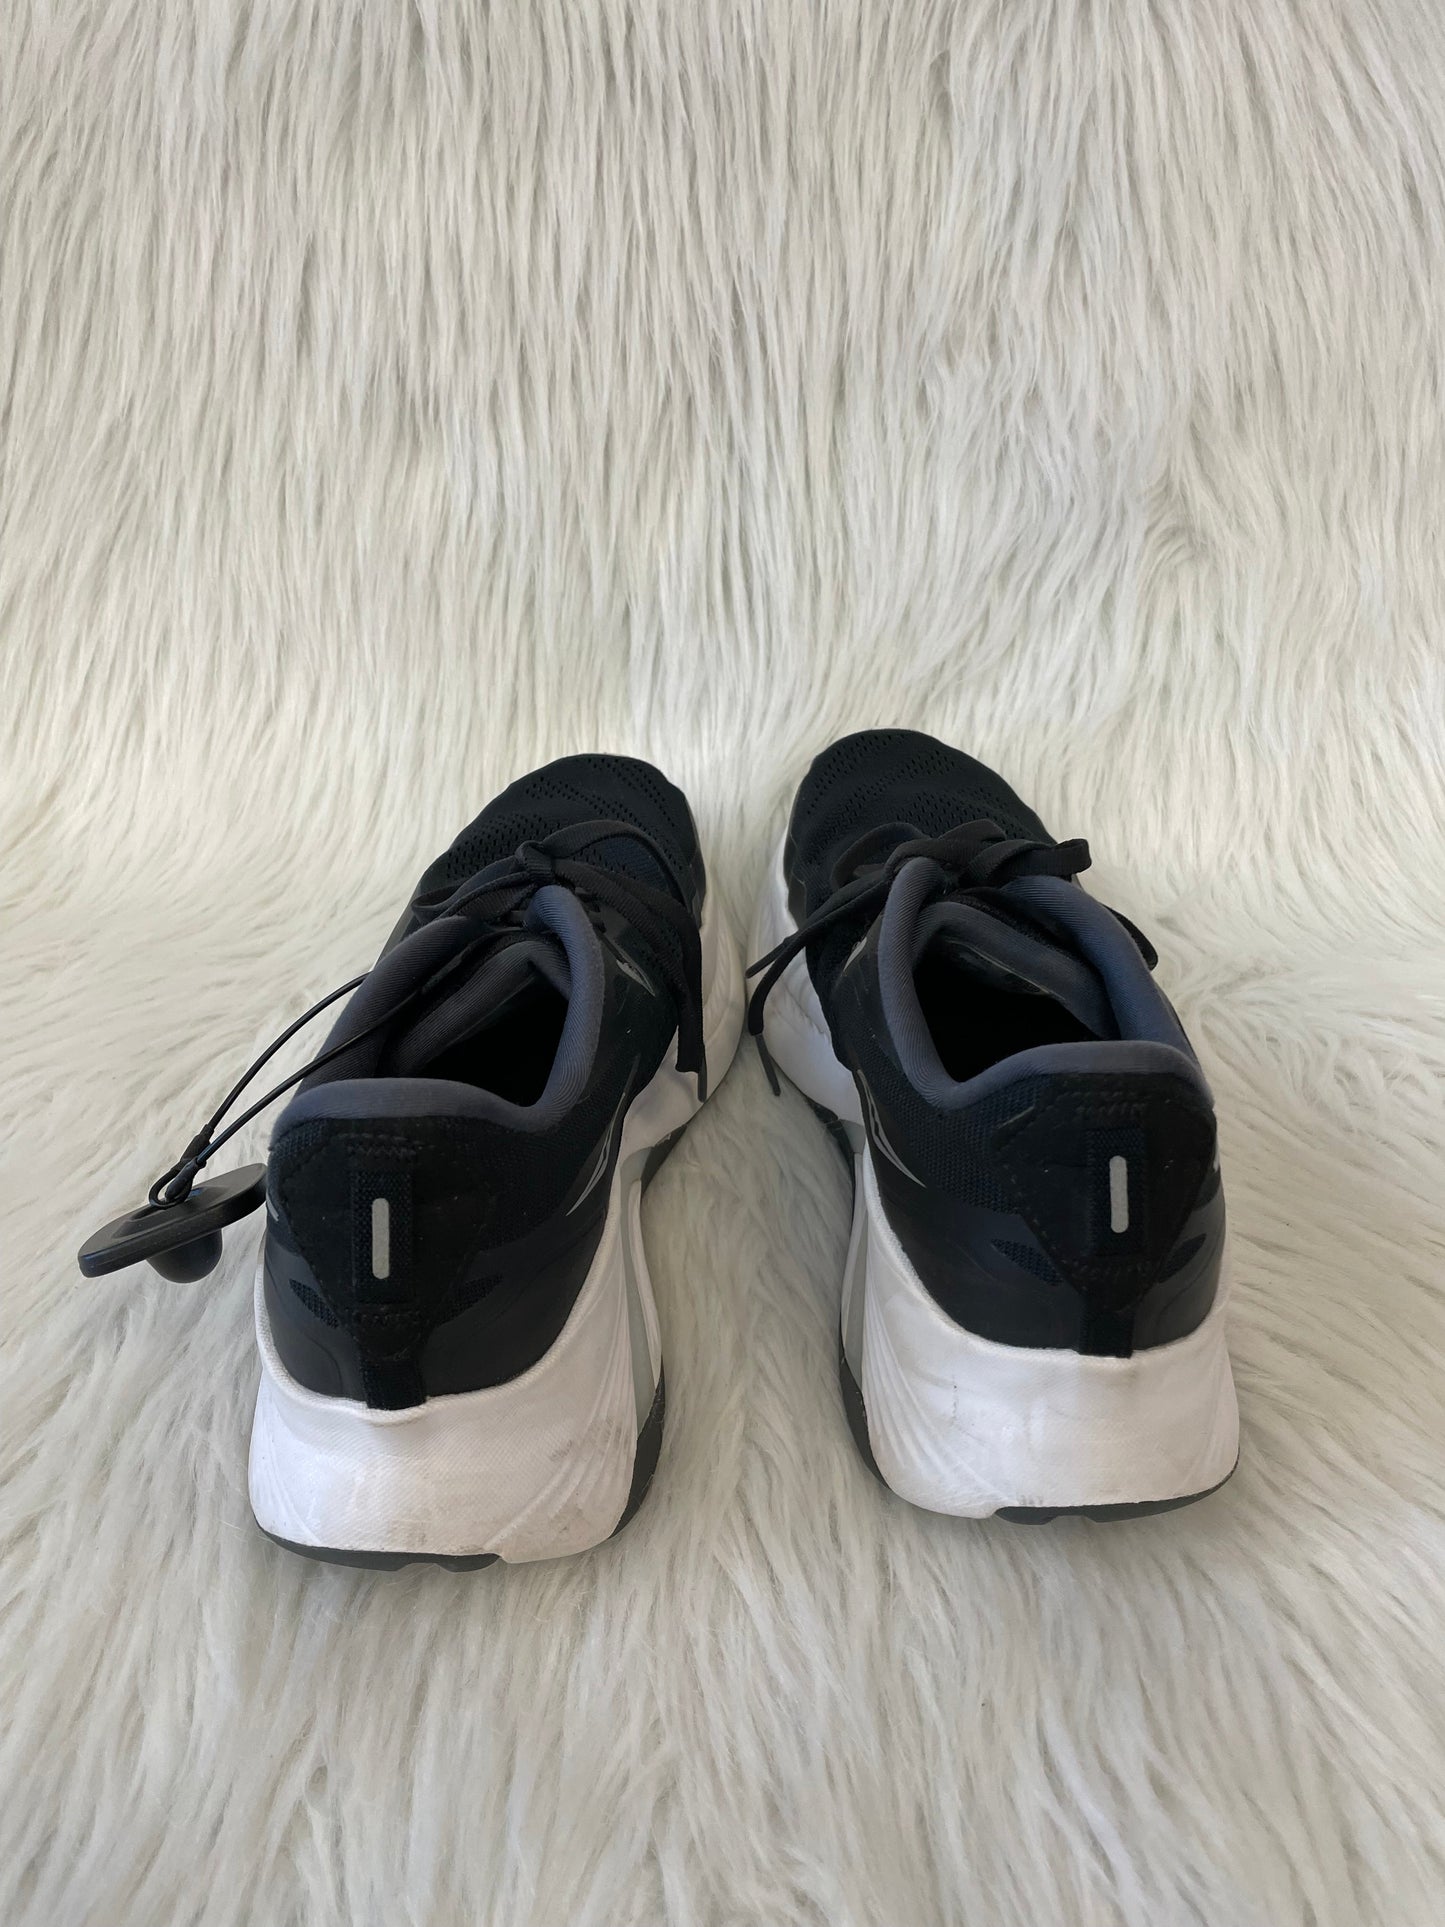 Black & White Shoes Athletic Saucony, Size 8.5